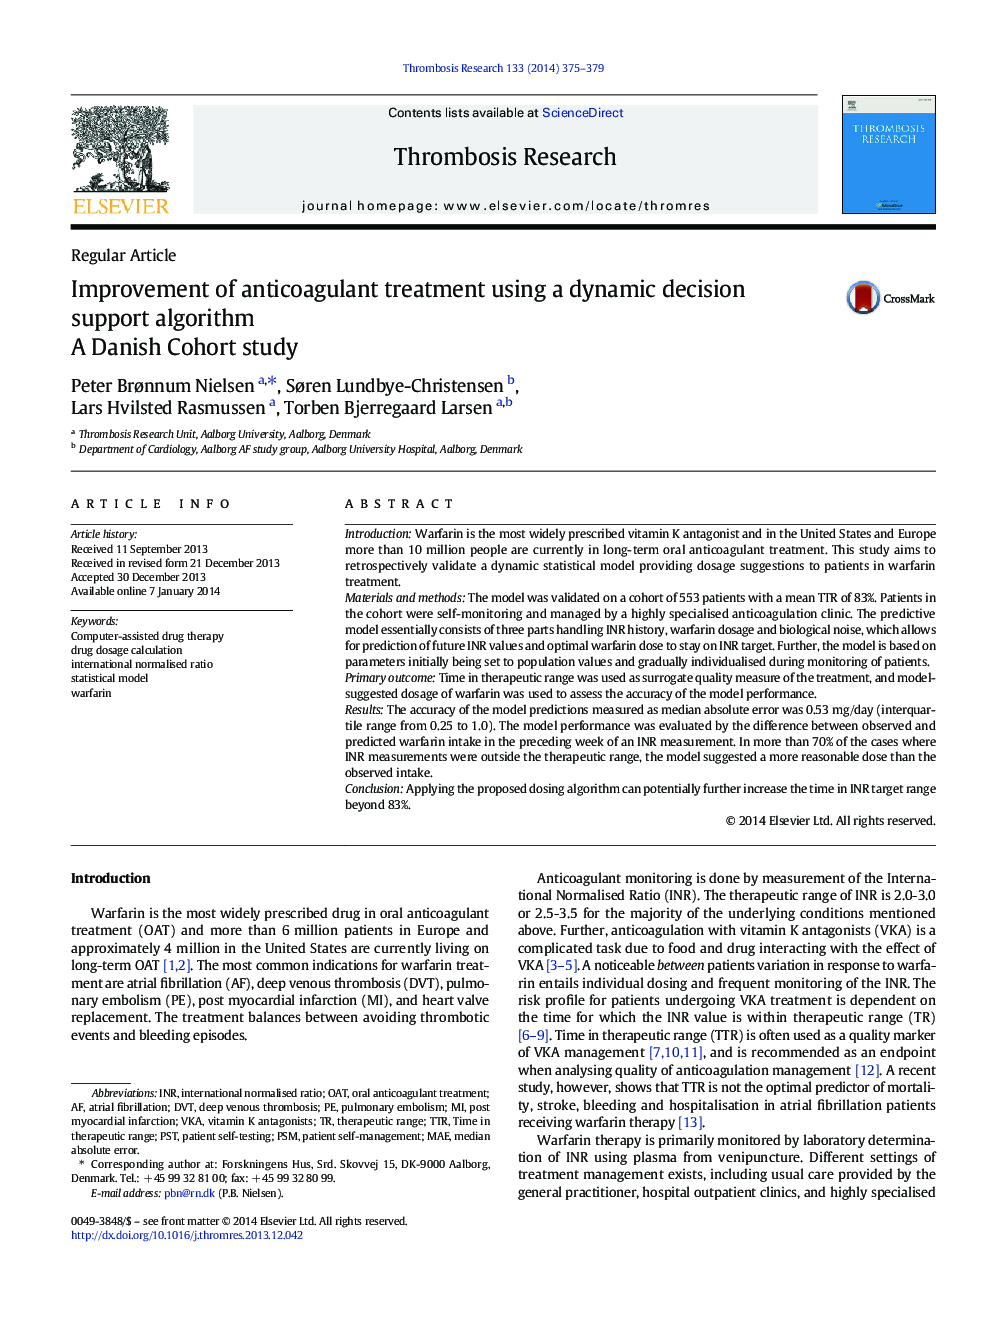 Improvement of anticoagulant treatment using a dynamic decision support algorithm